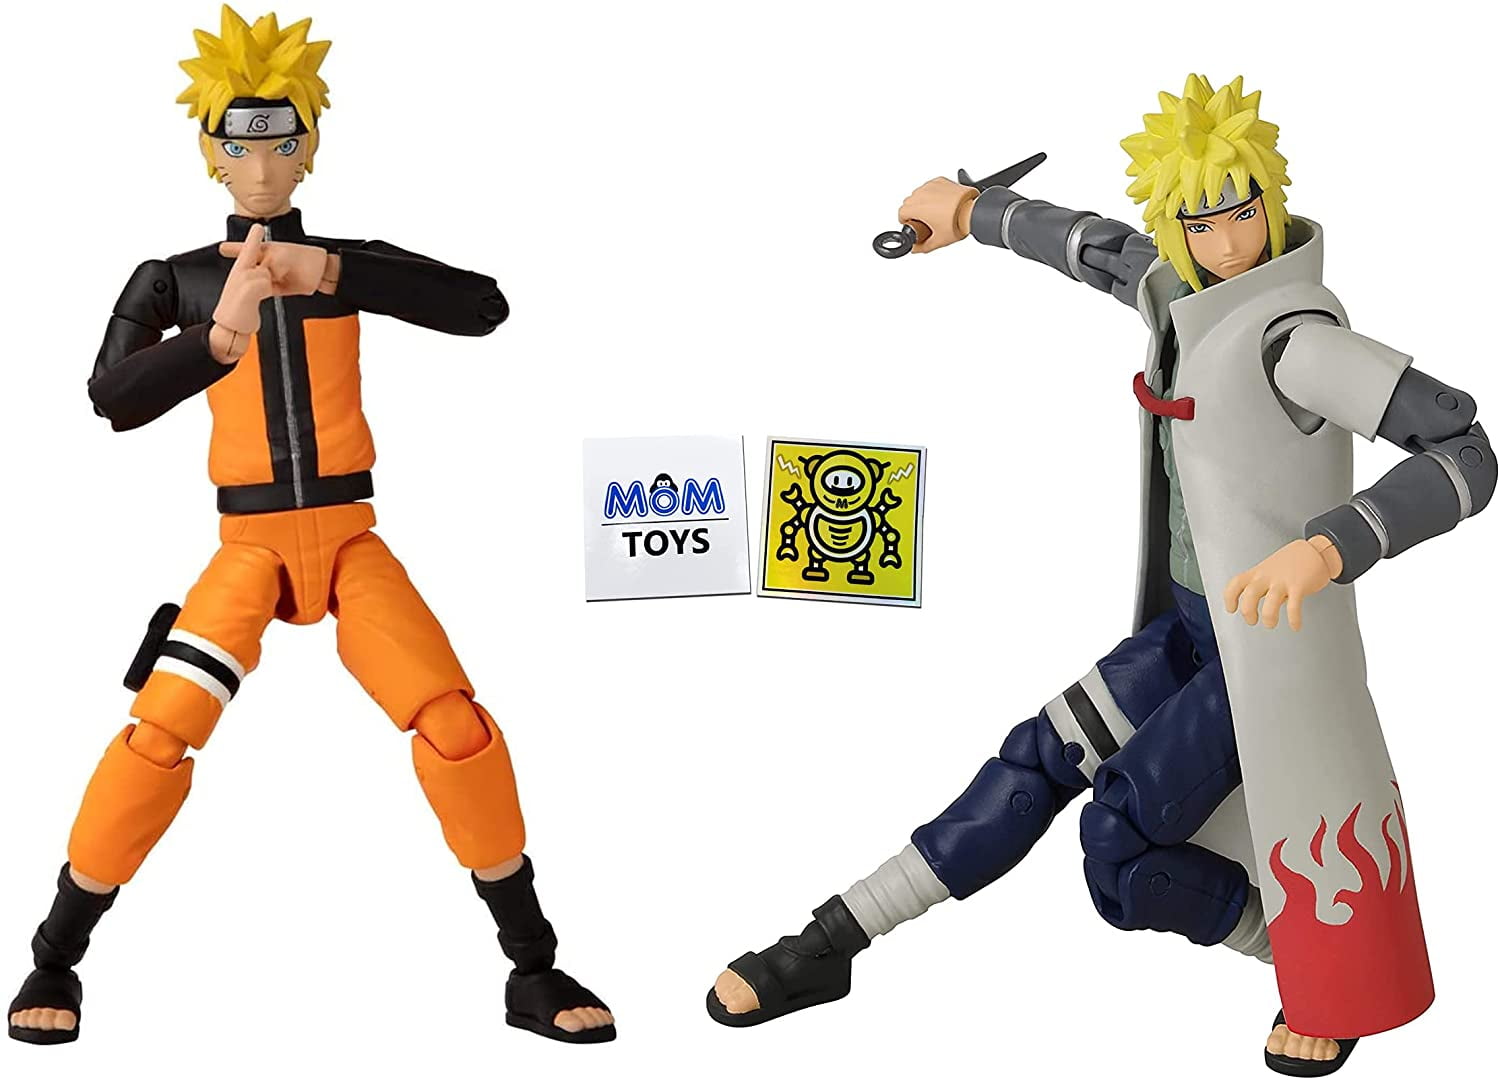 Naruto, Other, Naruto Stickers Lot Bundle New 5 Piece Set Anime Japan